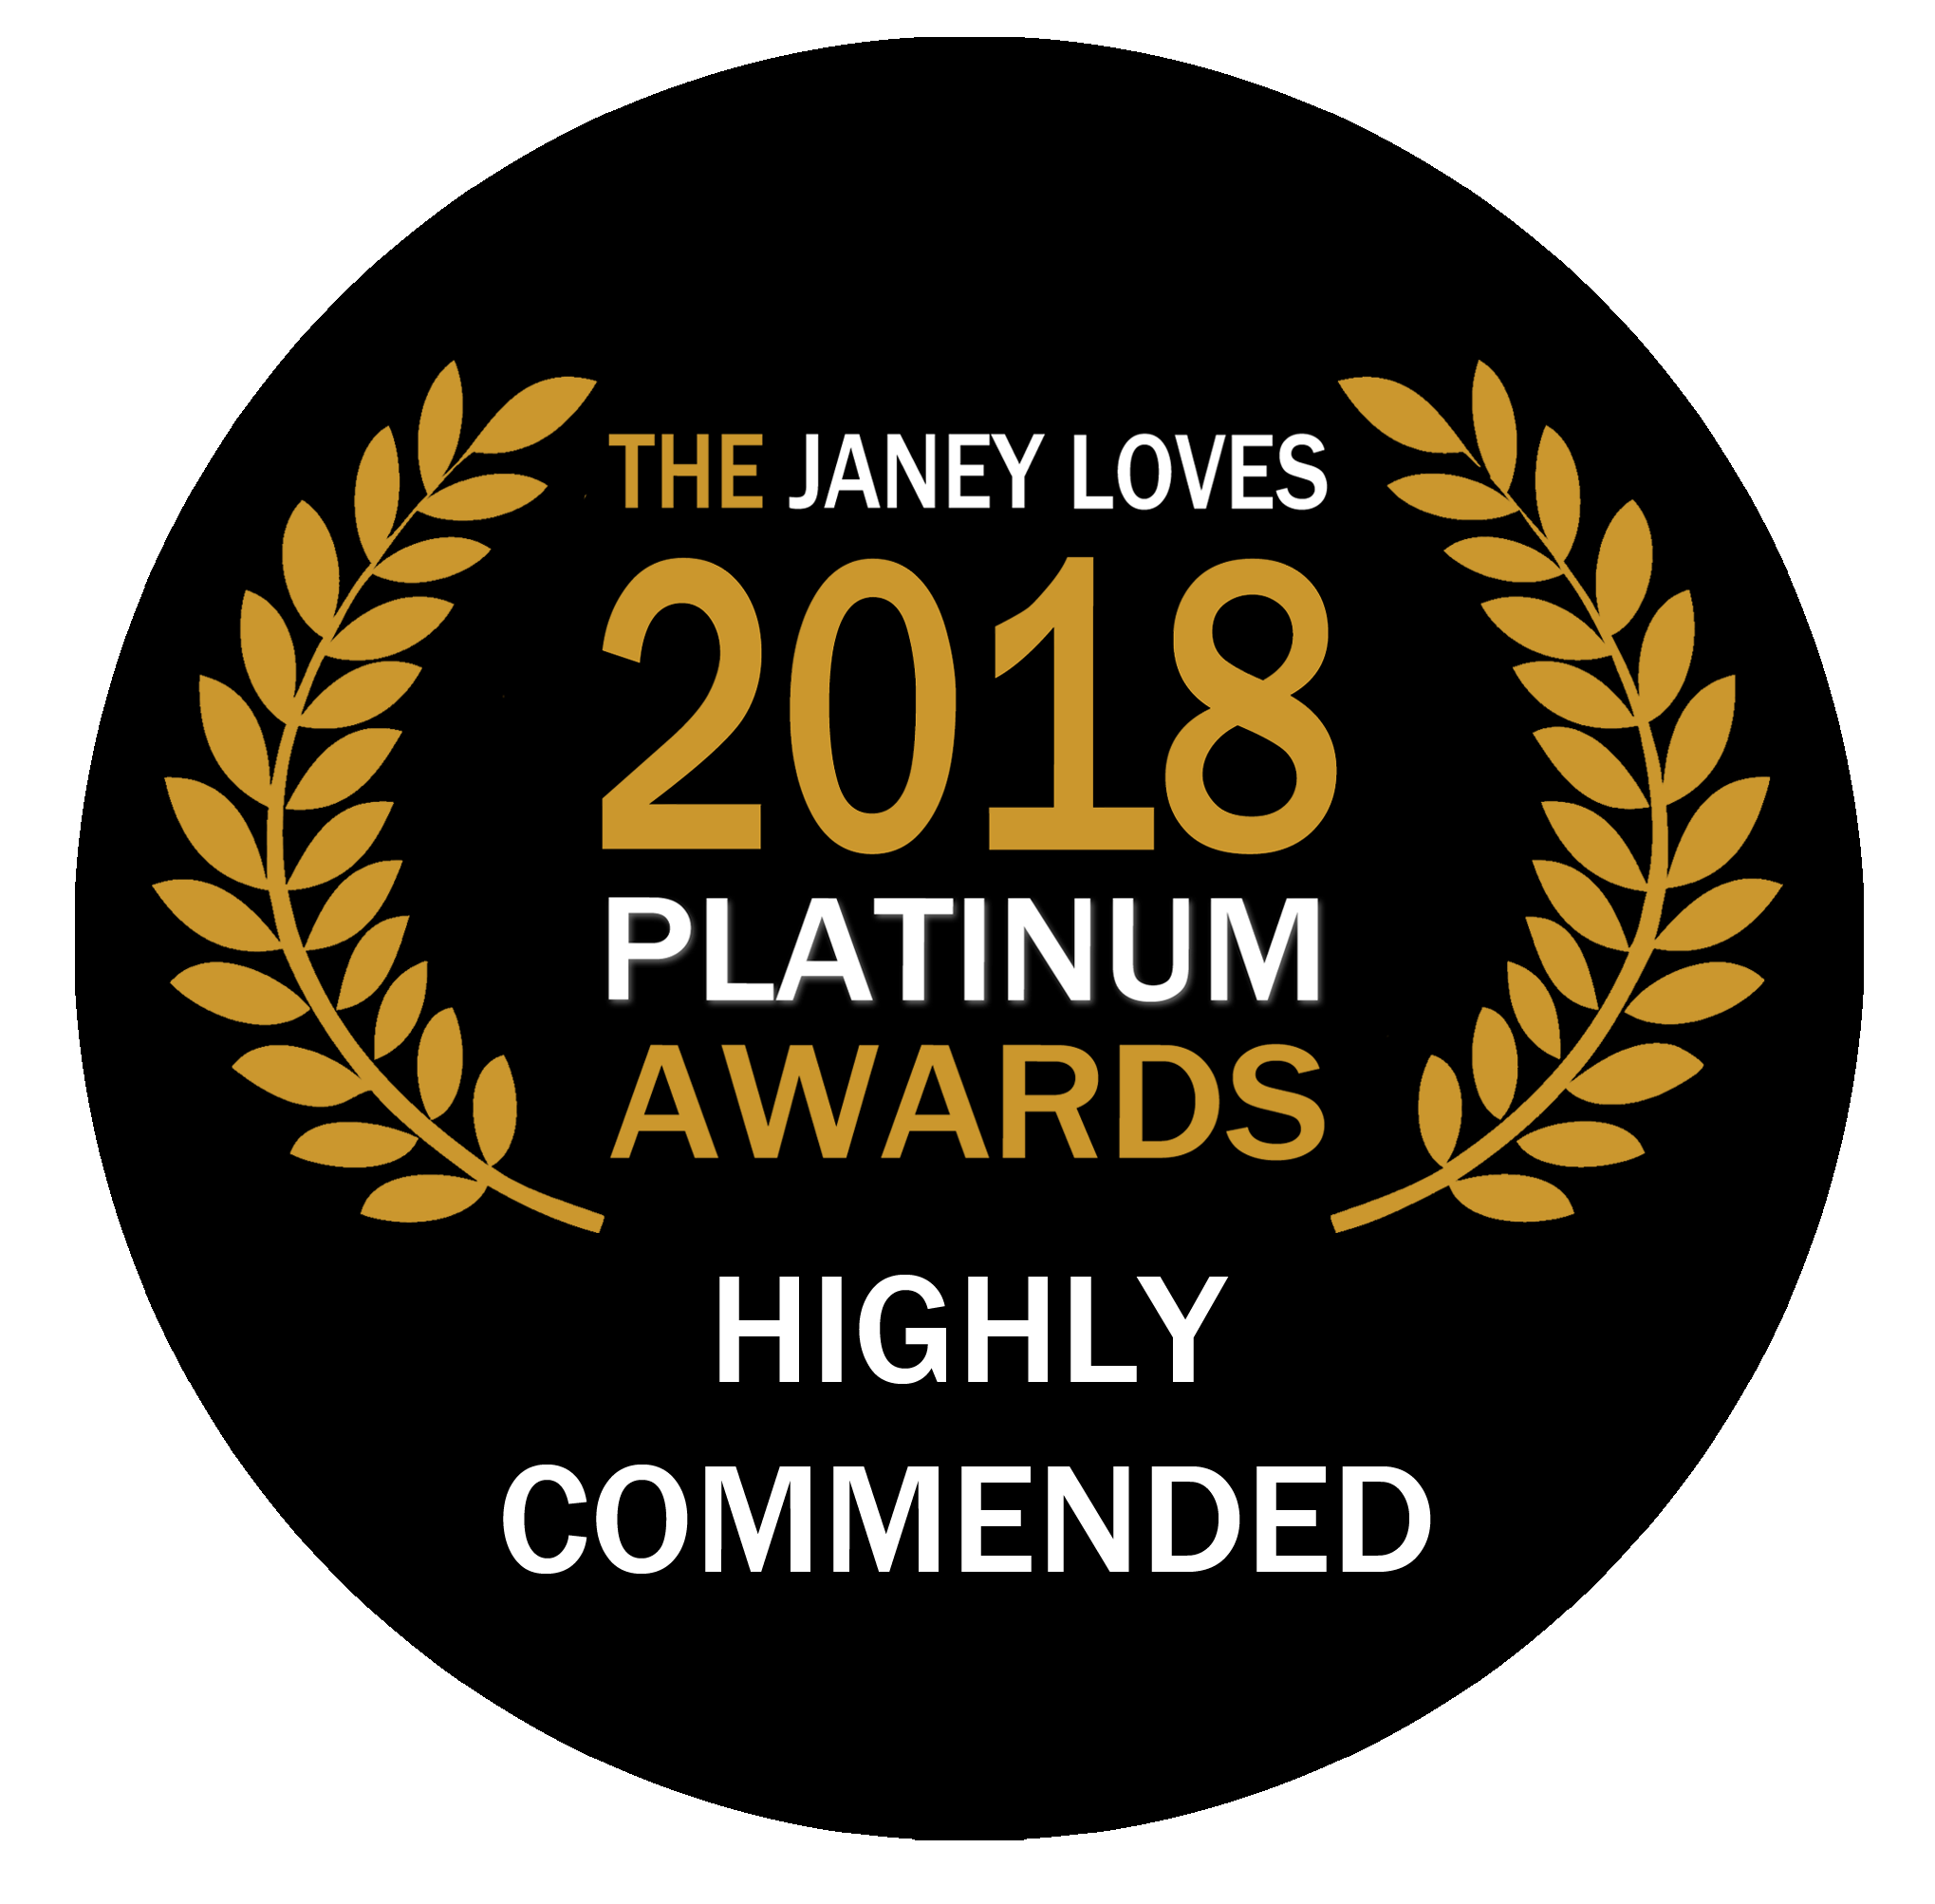 The Janey Loves 2018 Platinum Awards highly commended Alteya Rose Fields.